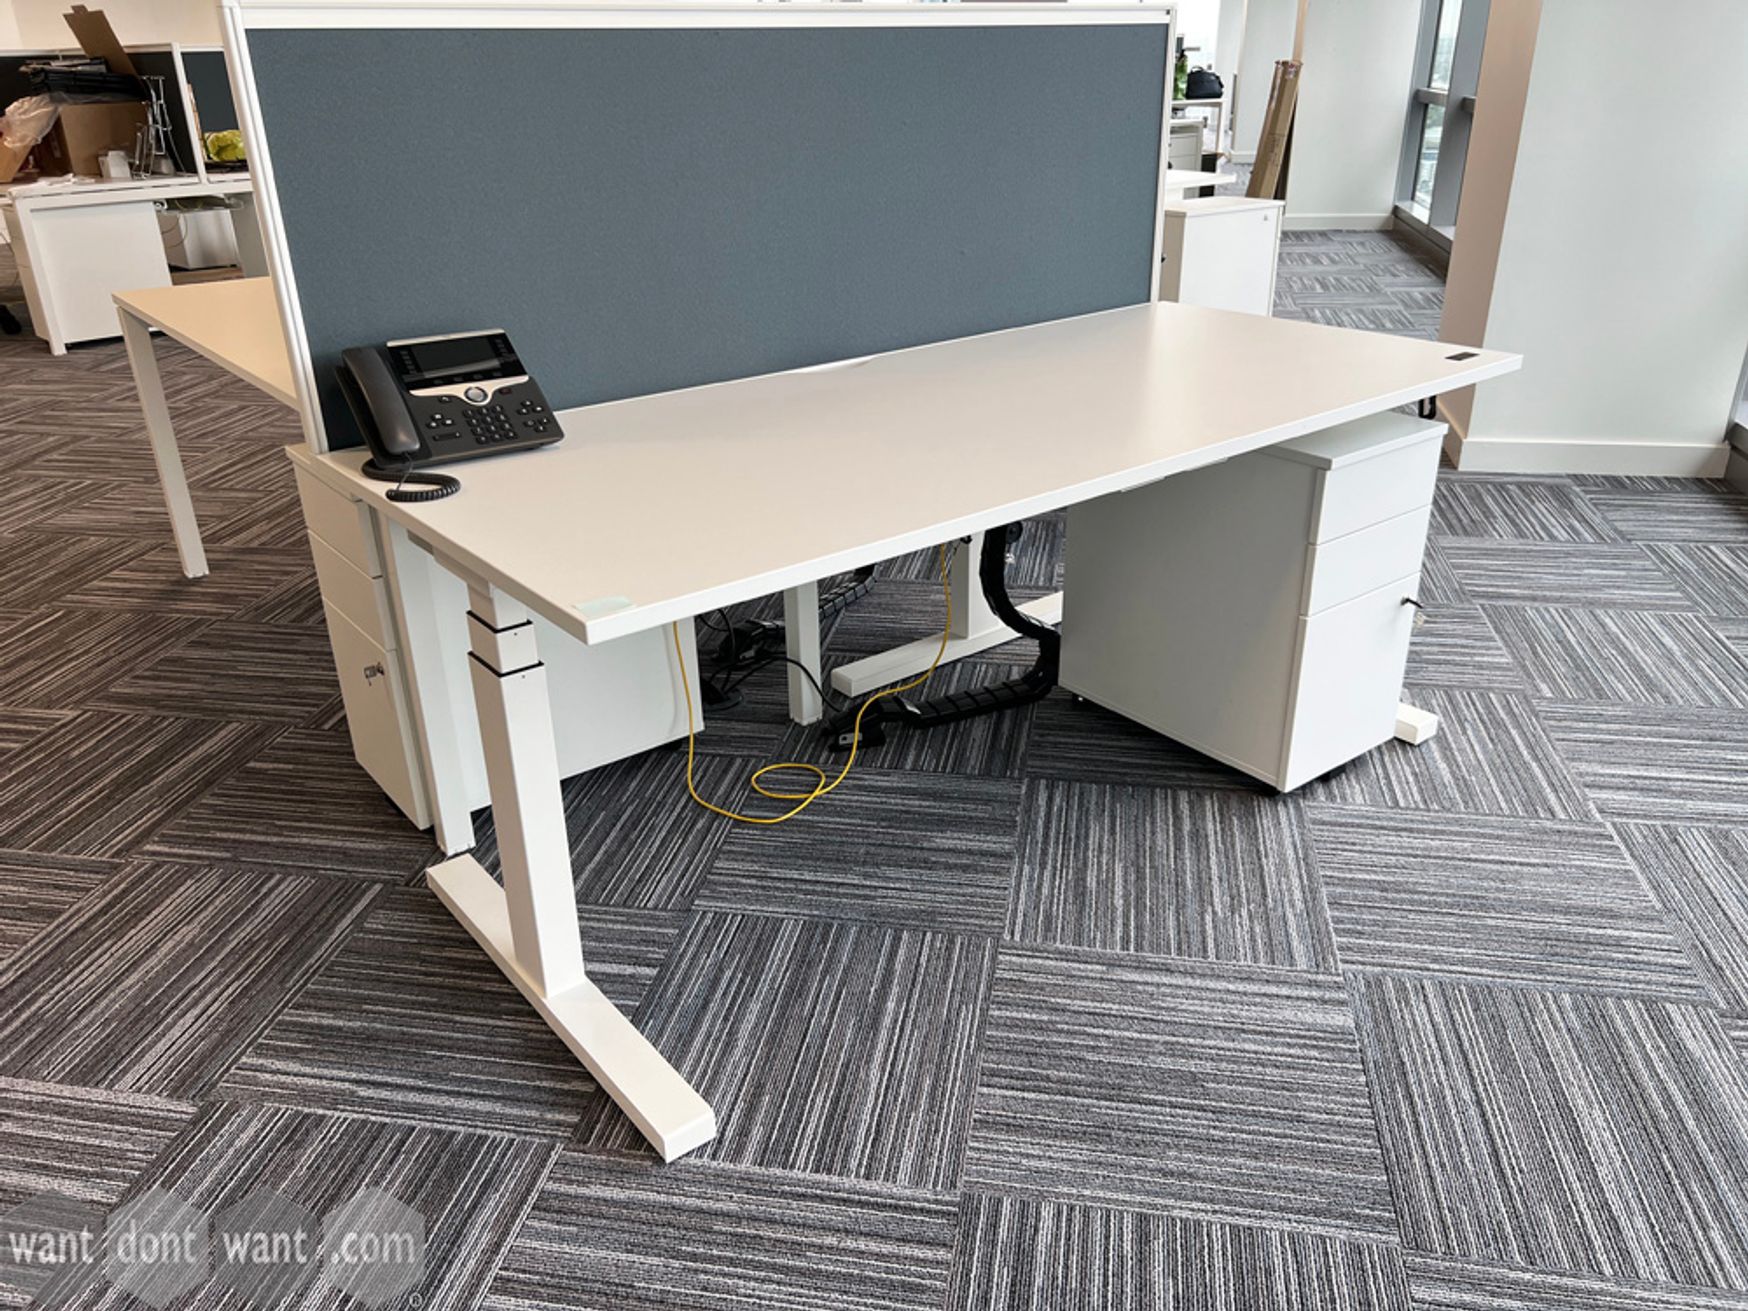 Used 1800mm Senator height-adjustable desks with cable trays